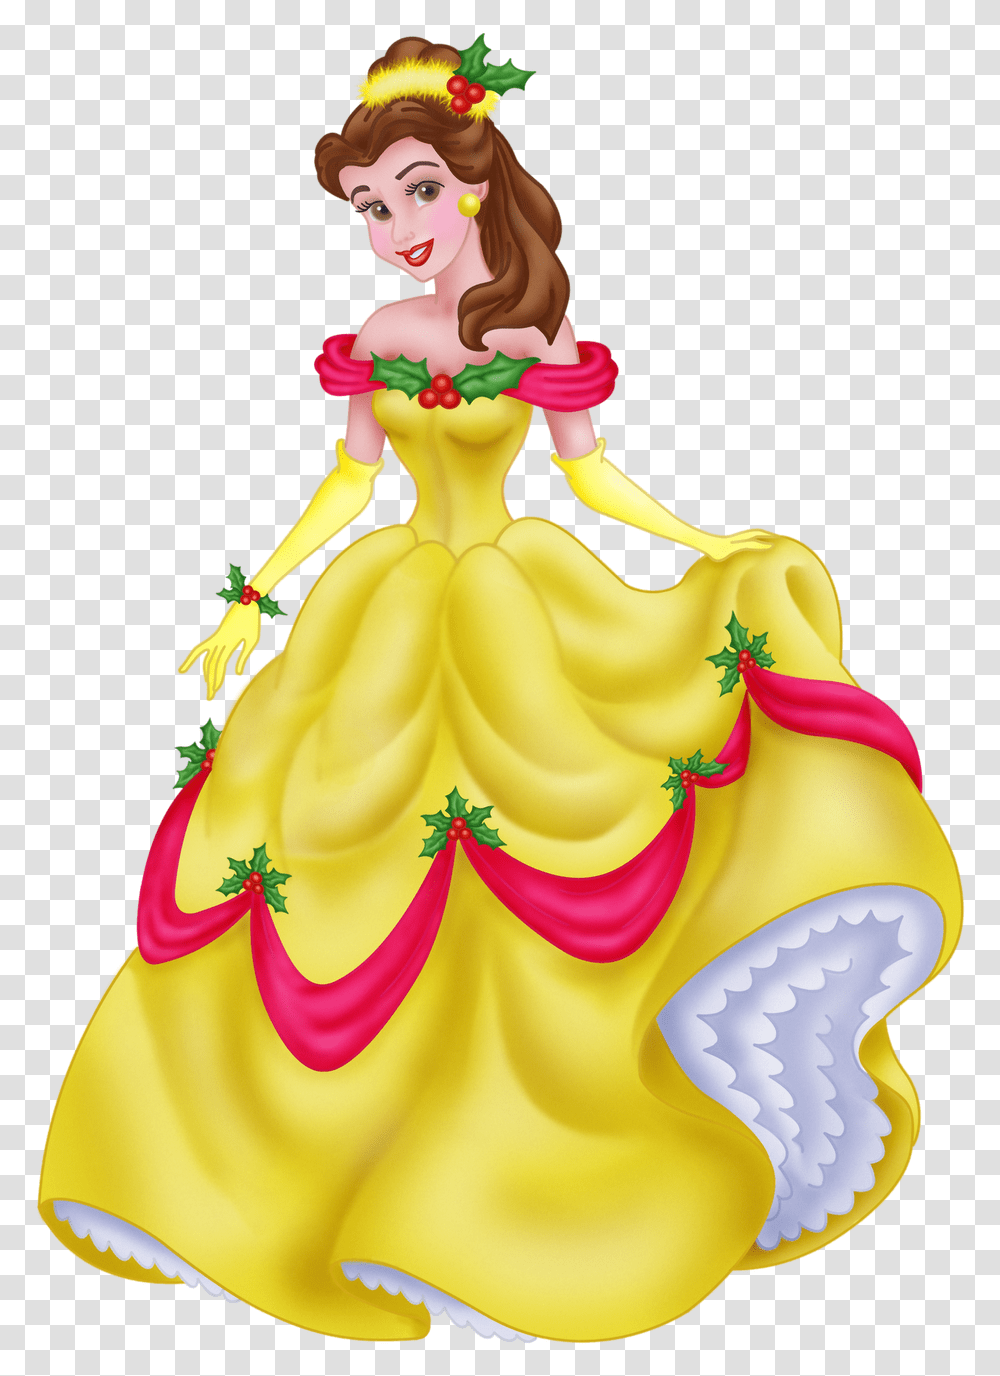 Disney Princesses Clipart Christmas Princesas Disney Imagens Princesas Da Disney, Figurine, Doll, Toy, Barbie Transparent Png